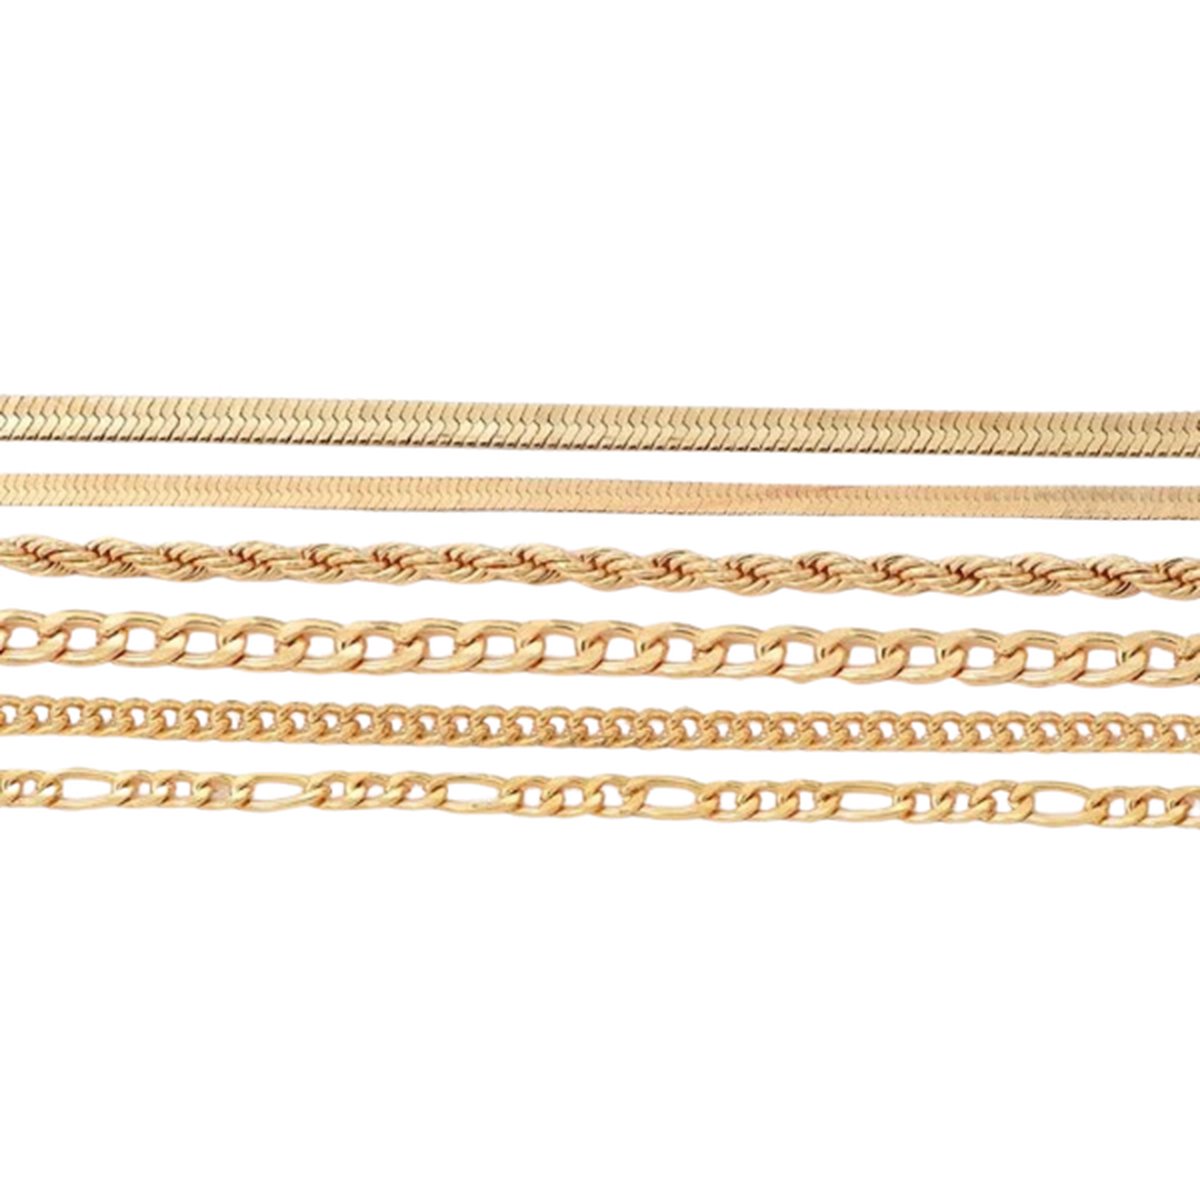 Armband dames Goudkleurig staal - Armbanden set dames - Armbandensets - Gouden armband staal - Goud armbandje dames - Set 6 stuks - Goud kleurig staal